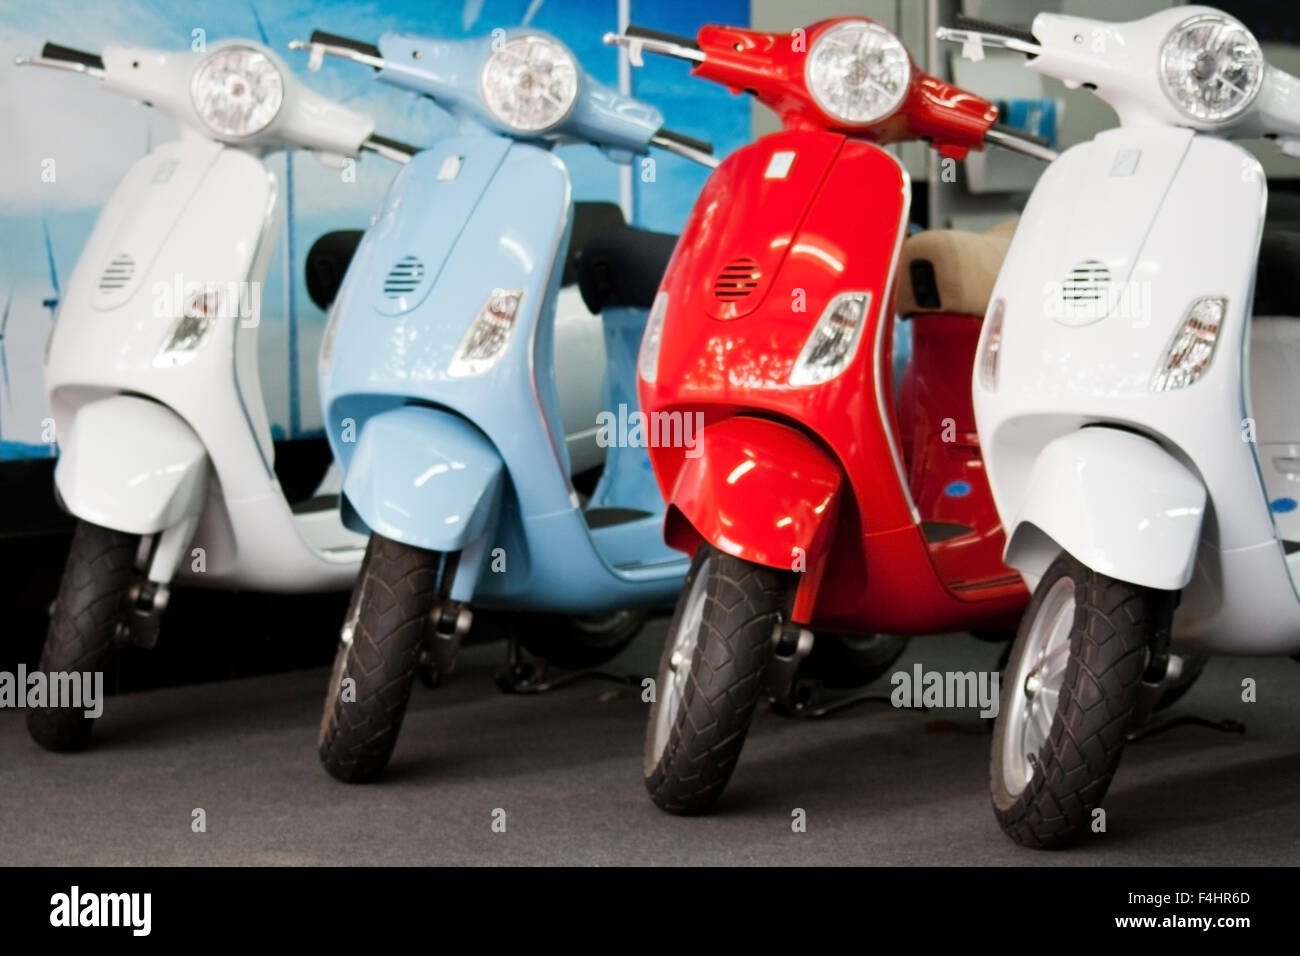 Vier verschiedene farbige Vespa Roller im Showroom, neu, makellos sauber, makellos, Kühlen, eleganten, stilvollen italienischen Mopeds und kultigen Beförderungsmittel Stockfoto